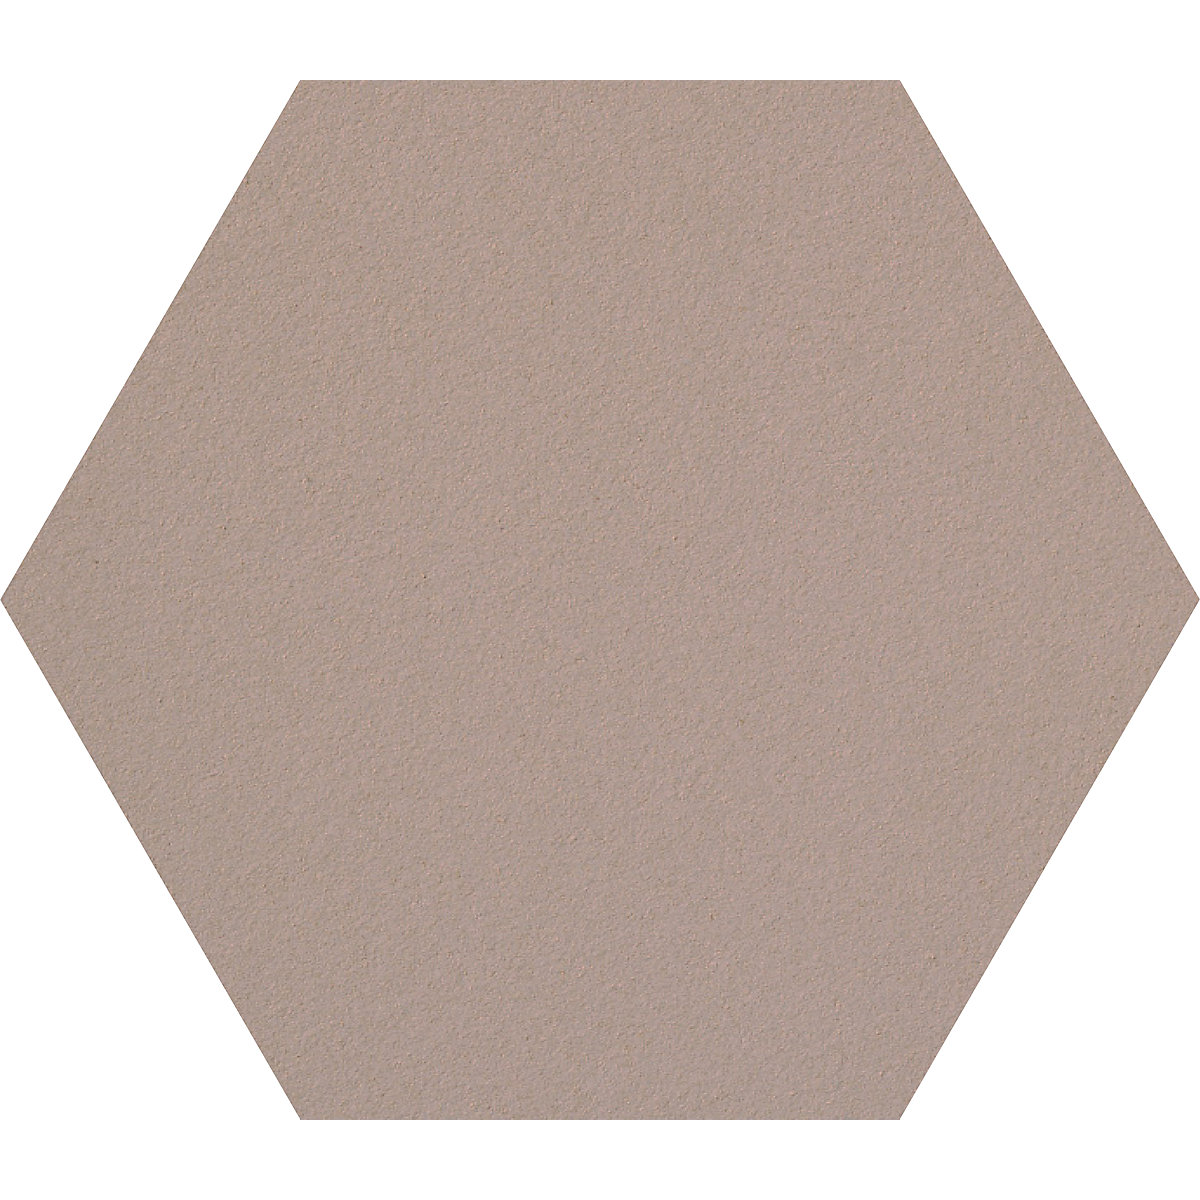 Design prikbord zeshoekig – Chameleon, kurk, b x h = 600 x 600 mm, zand-32